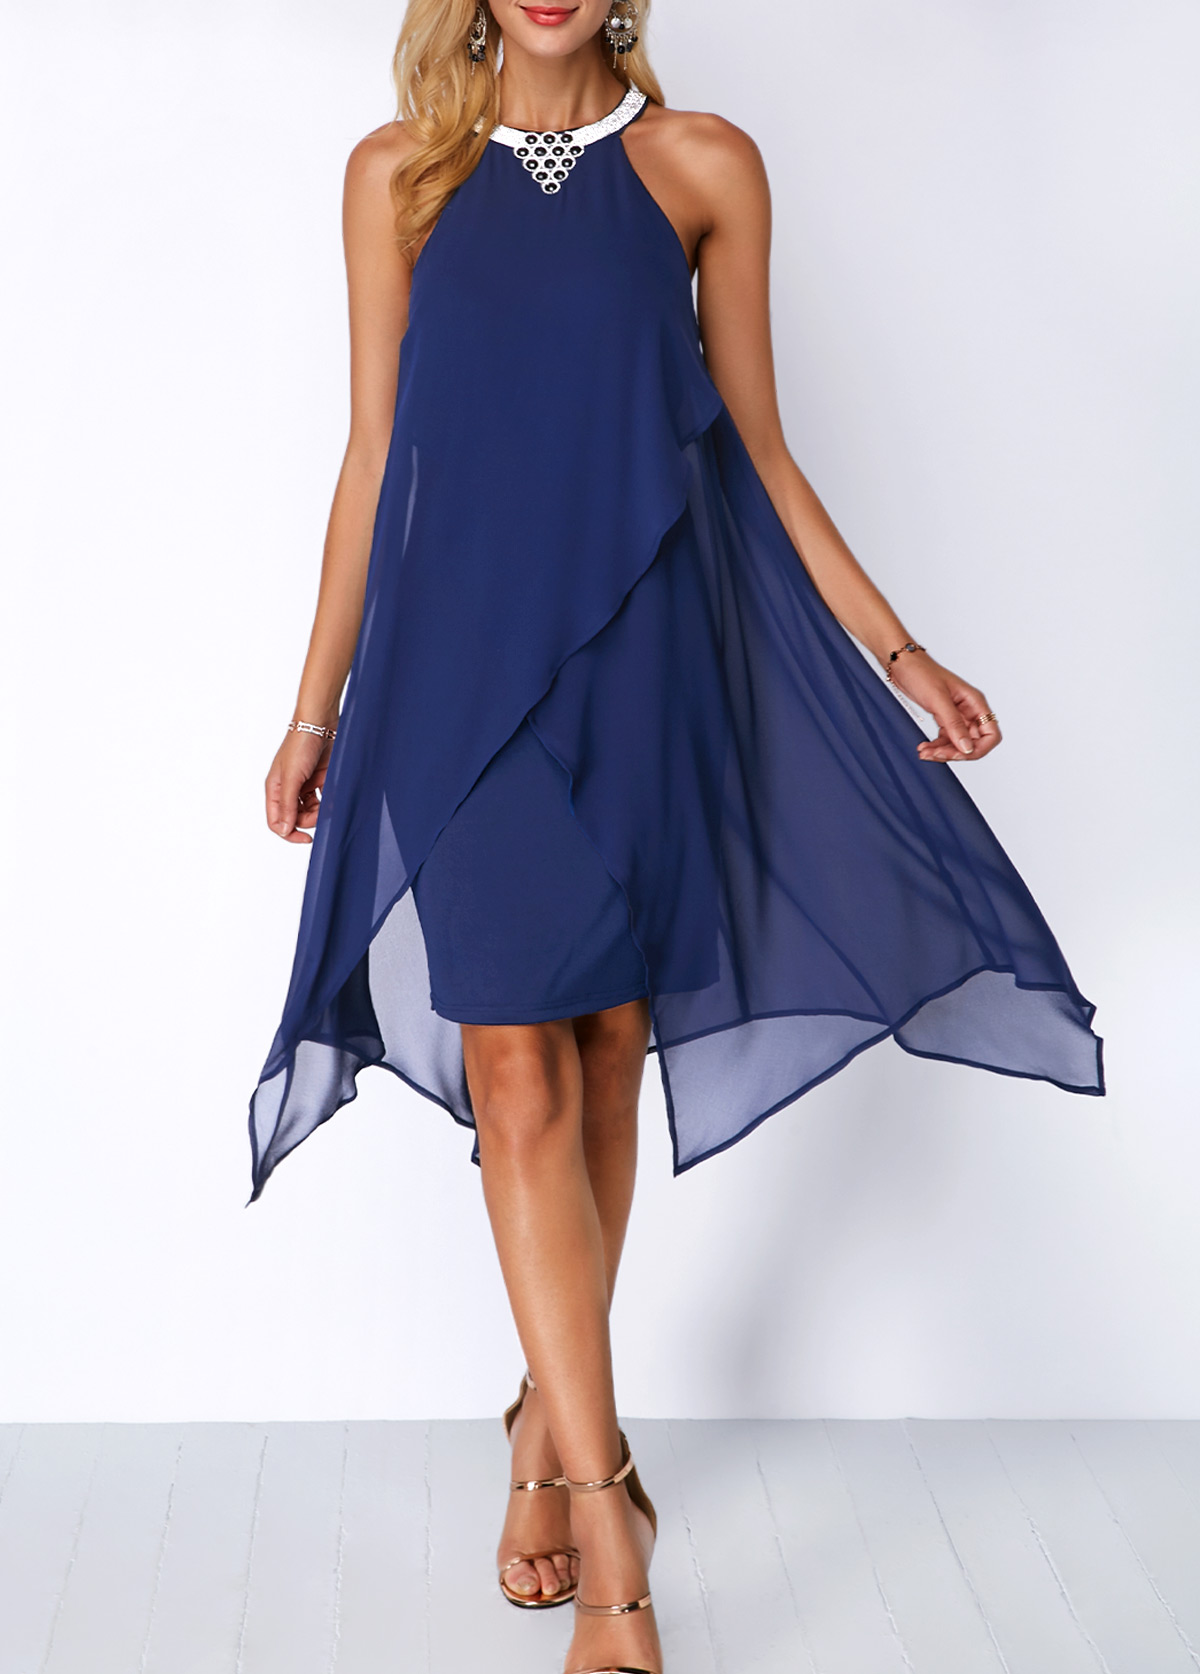 ROTITA Embellished Neck Chiffon Overlay Blue Dress